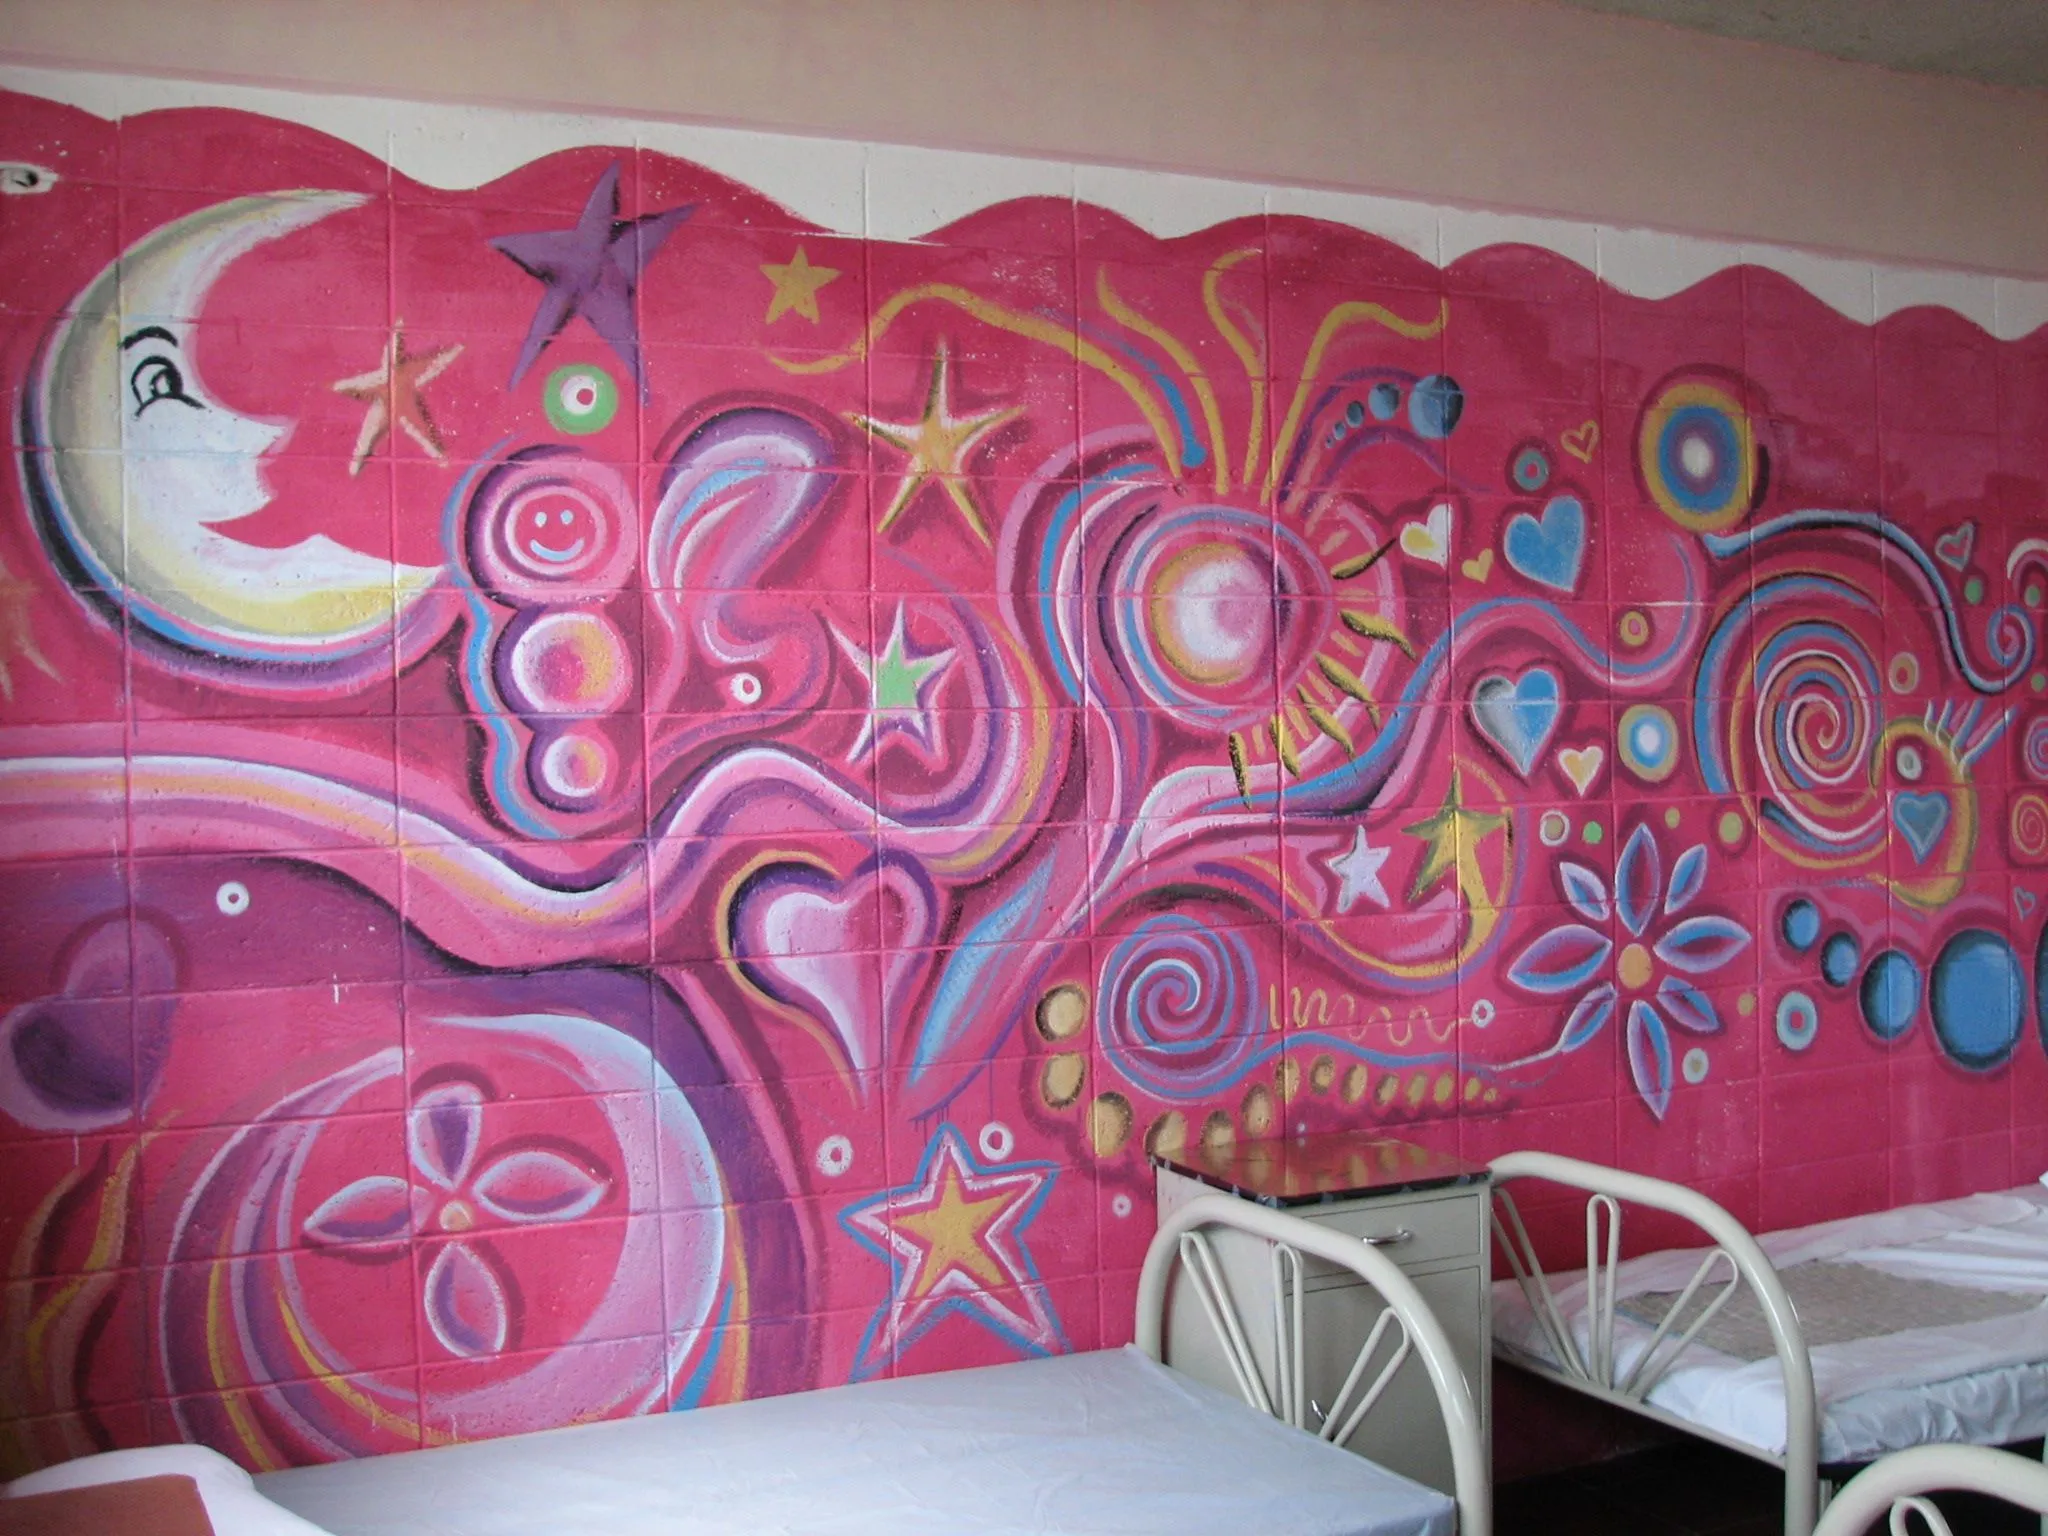 Murales by Gerardo Cornejo Anduray at Coroflot.